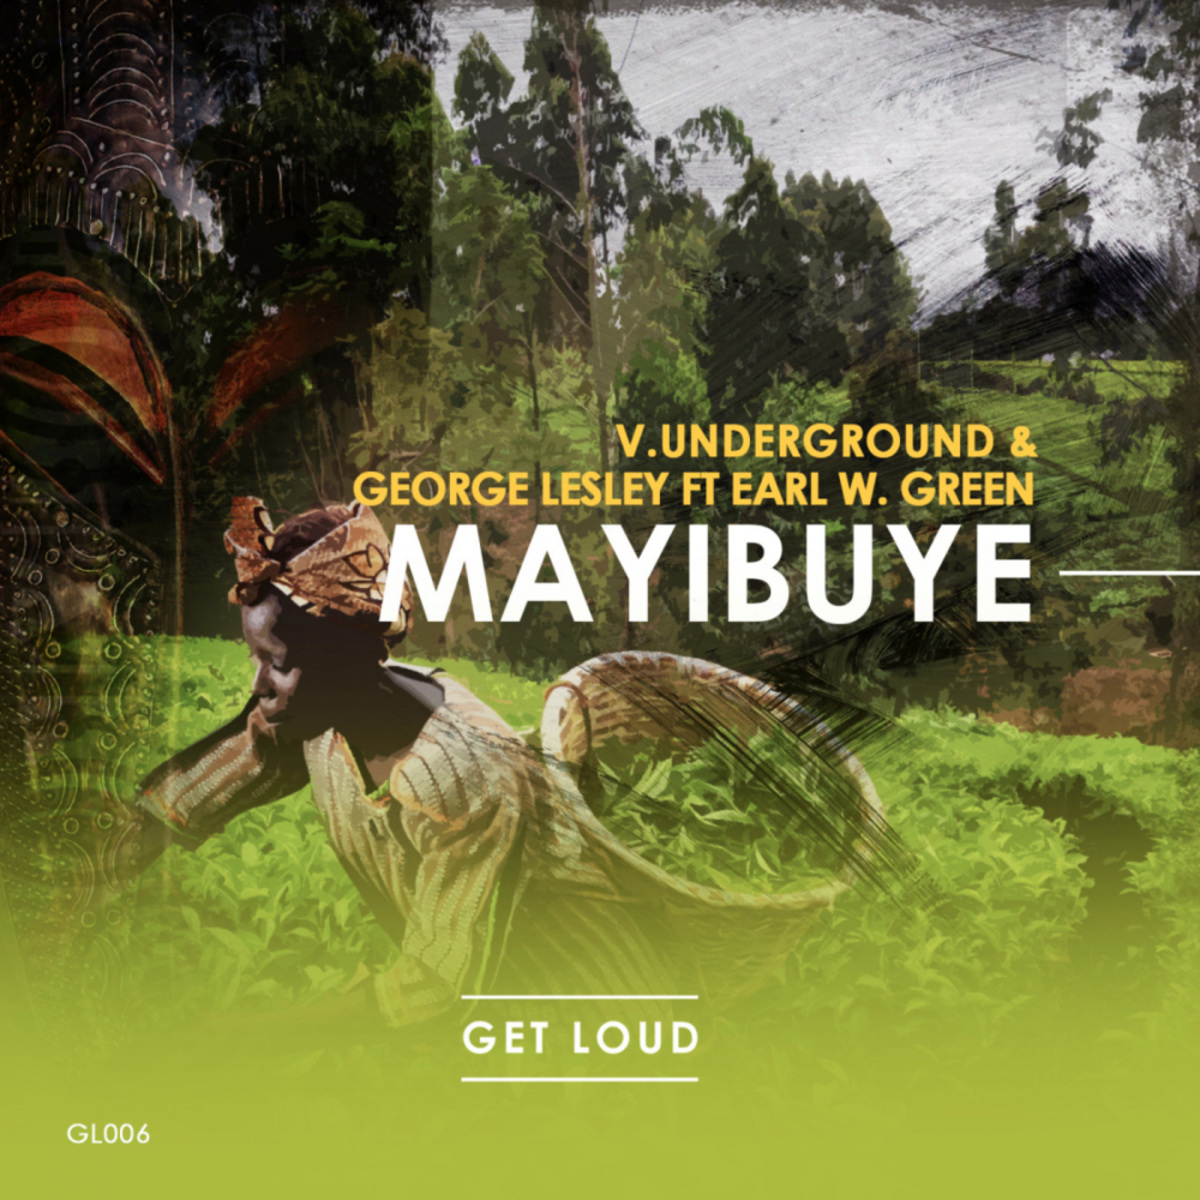 V.Underground & George Lesley ft Earl W. Green - Mayibuye / Get Loud